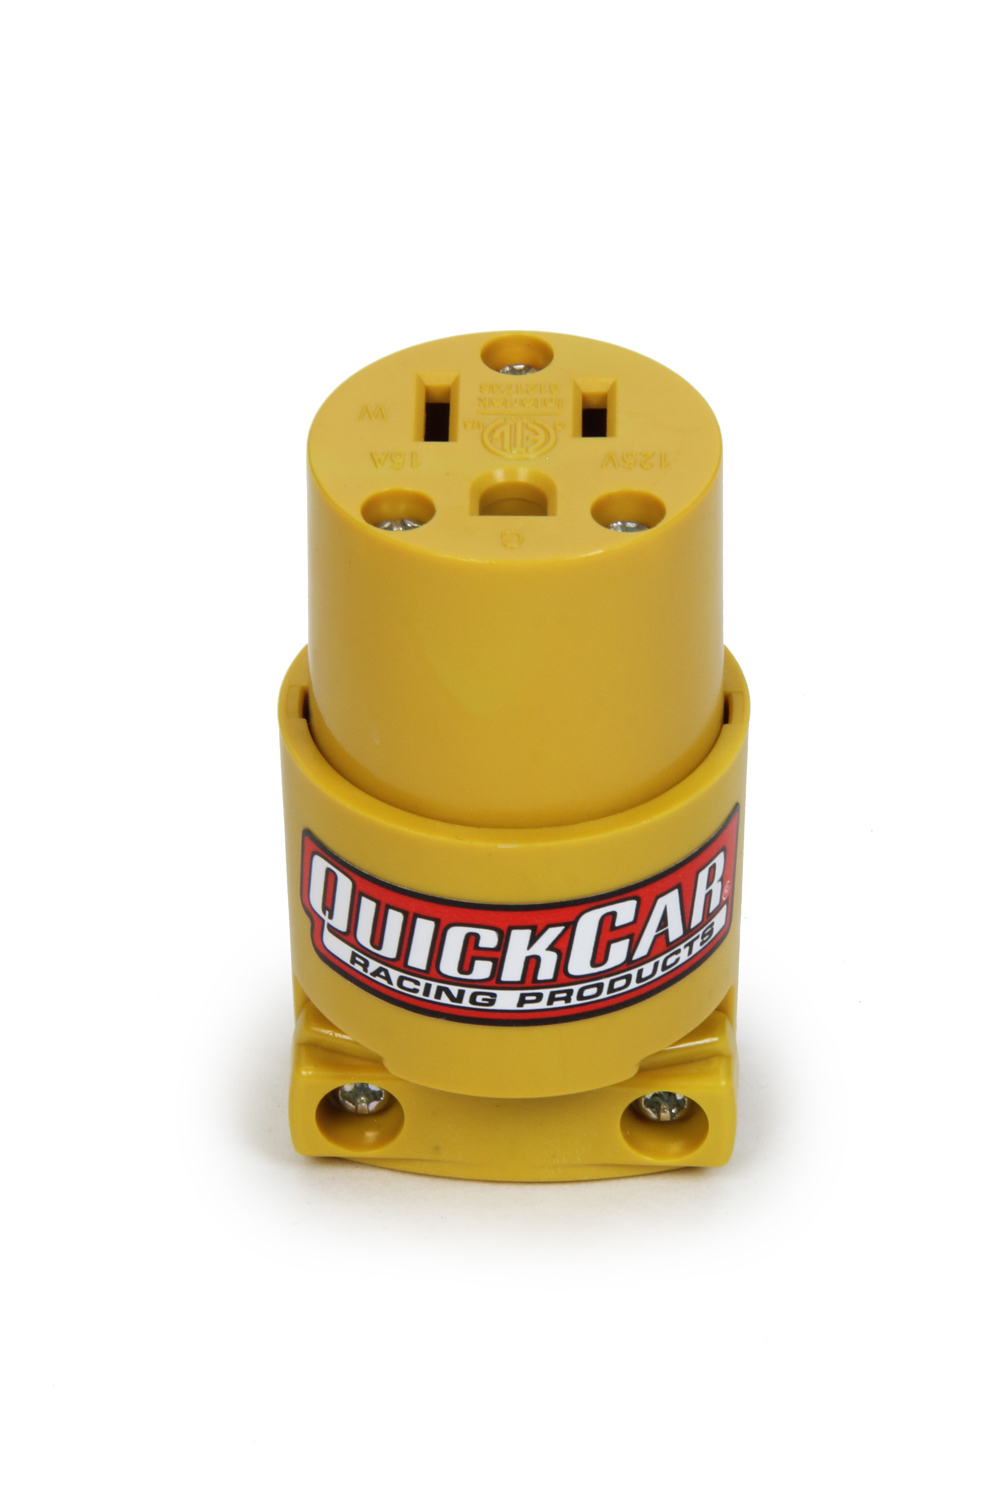 QuickCar 57-720 Accessory Plug-In, 110V, 3-Prong Female Socket, Each